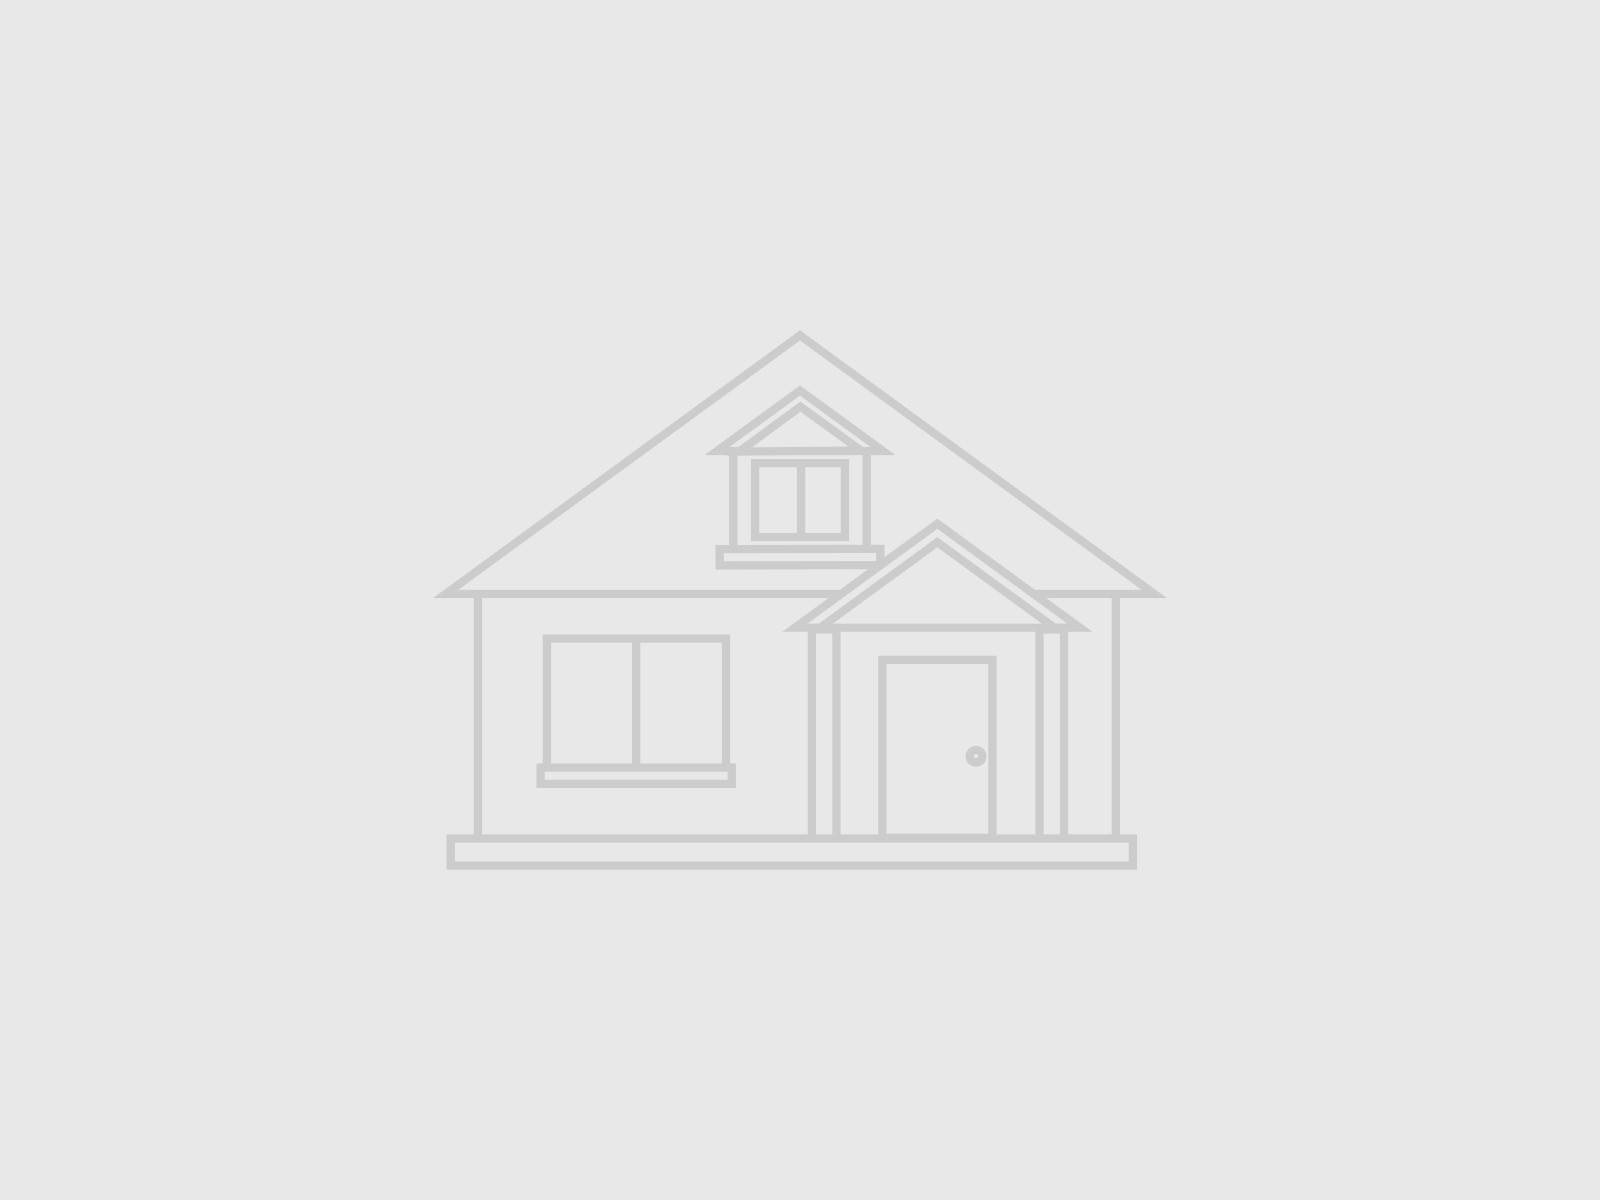 Single Family Homes for Sale at 554 1920 554 1920 Orem, Utah 84059 United States